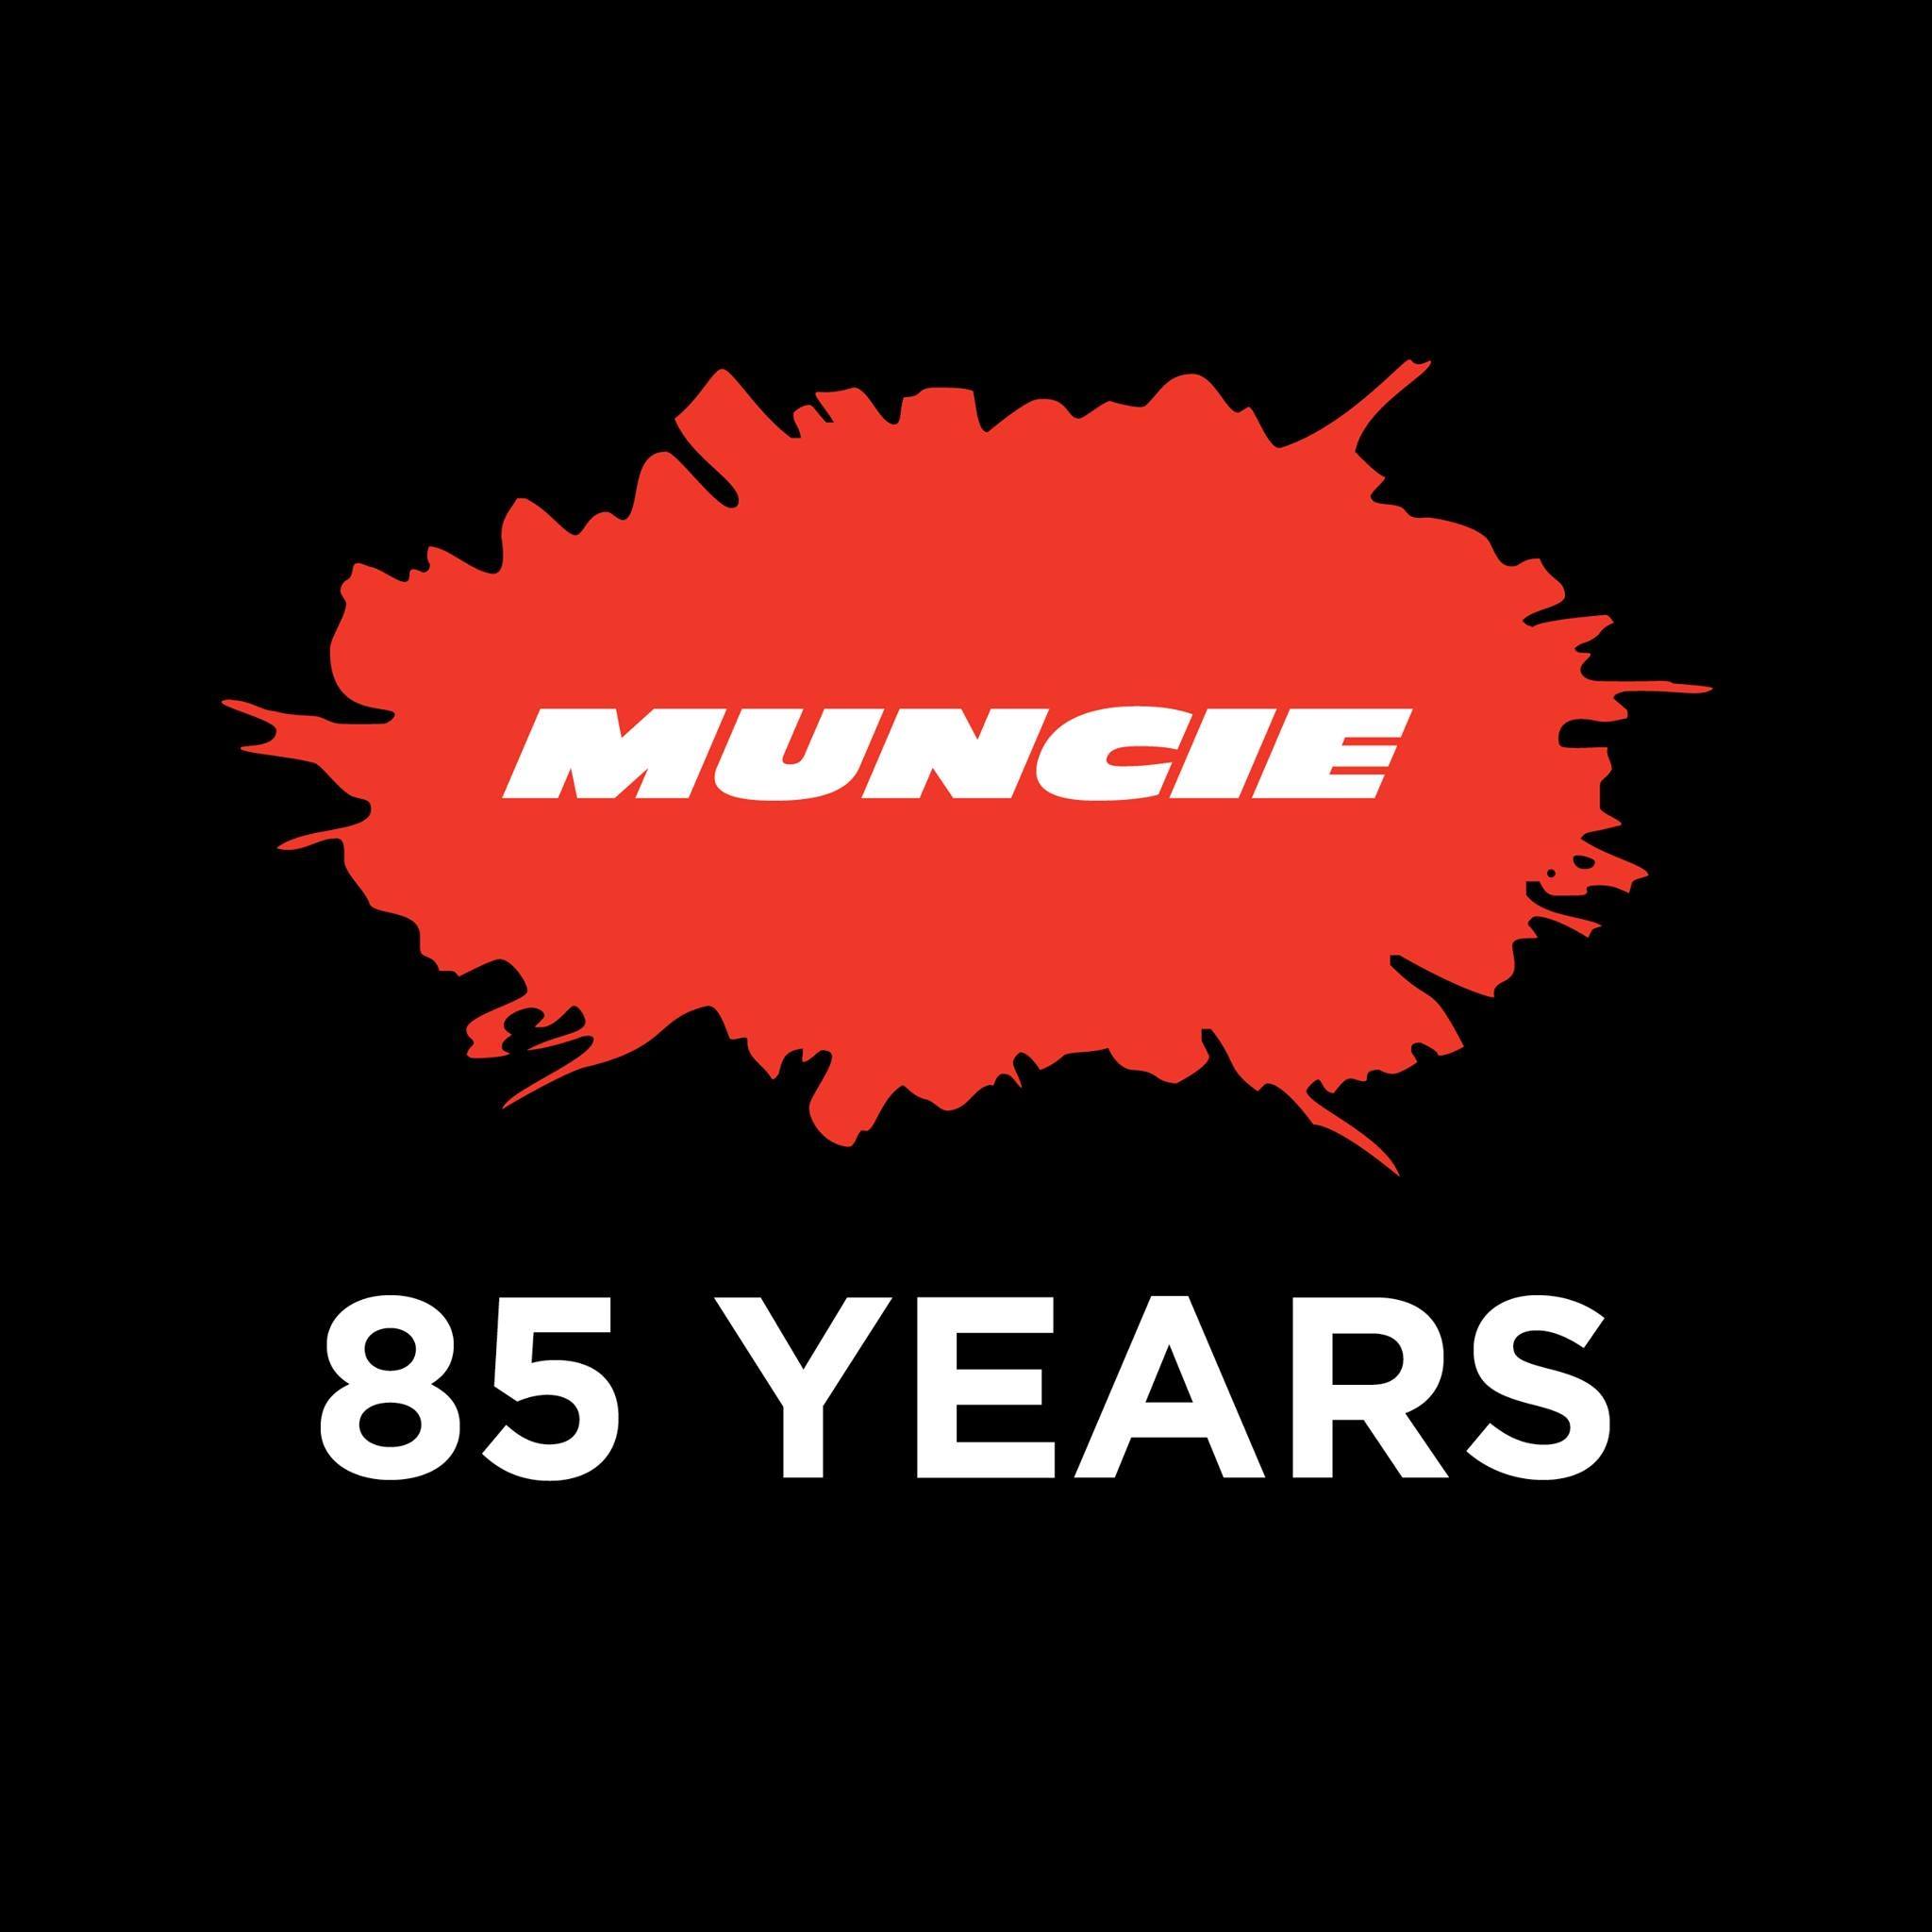 Muncie Power Products, Inc.